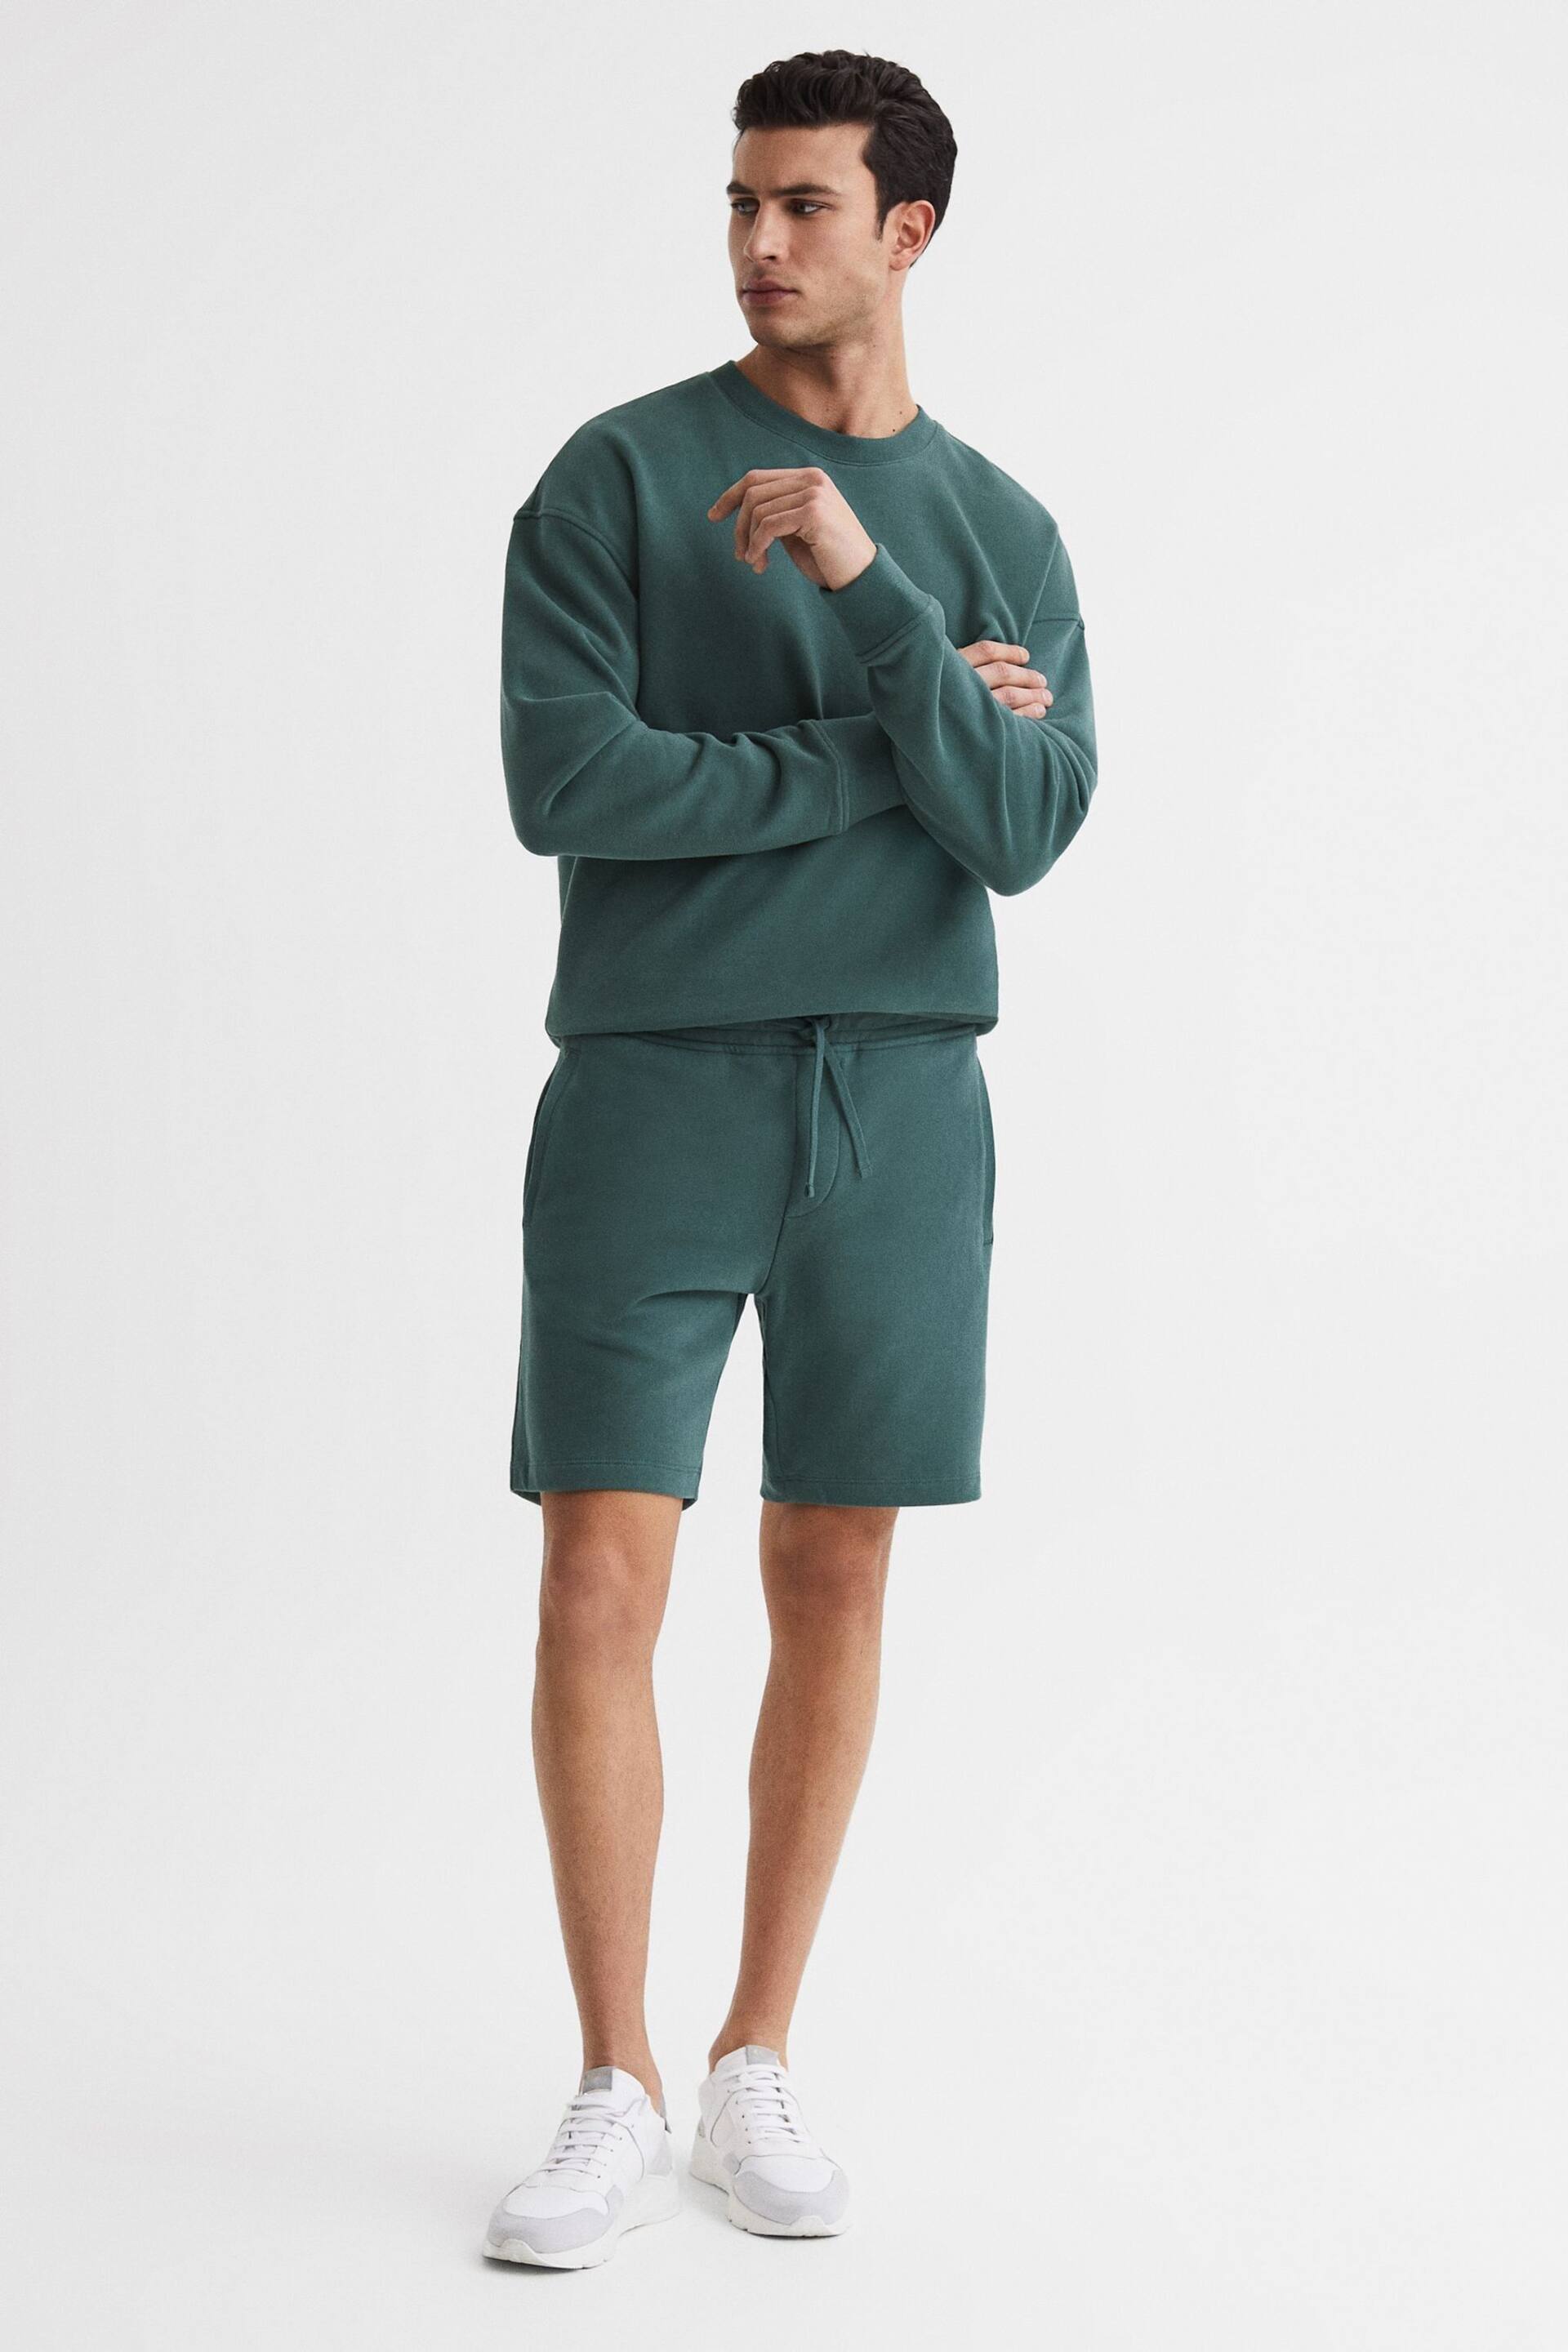 Reiss Midnight Green Henry Garment Dye Jersey Shorts - Image 3 of 5